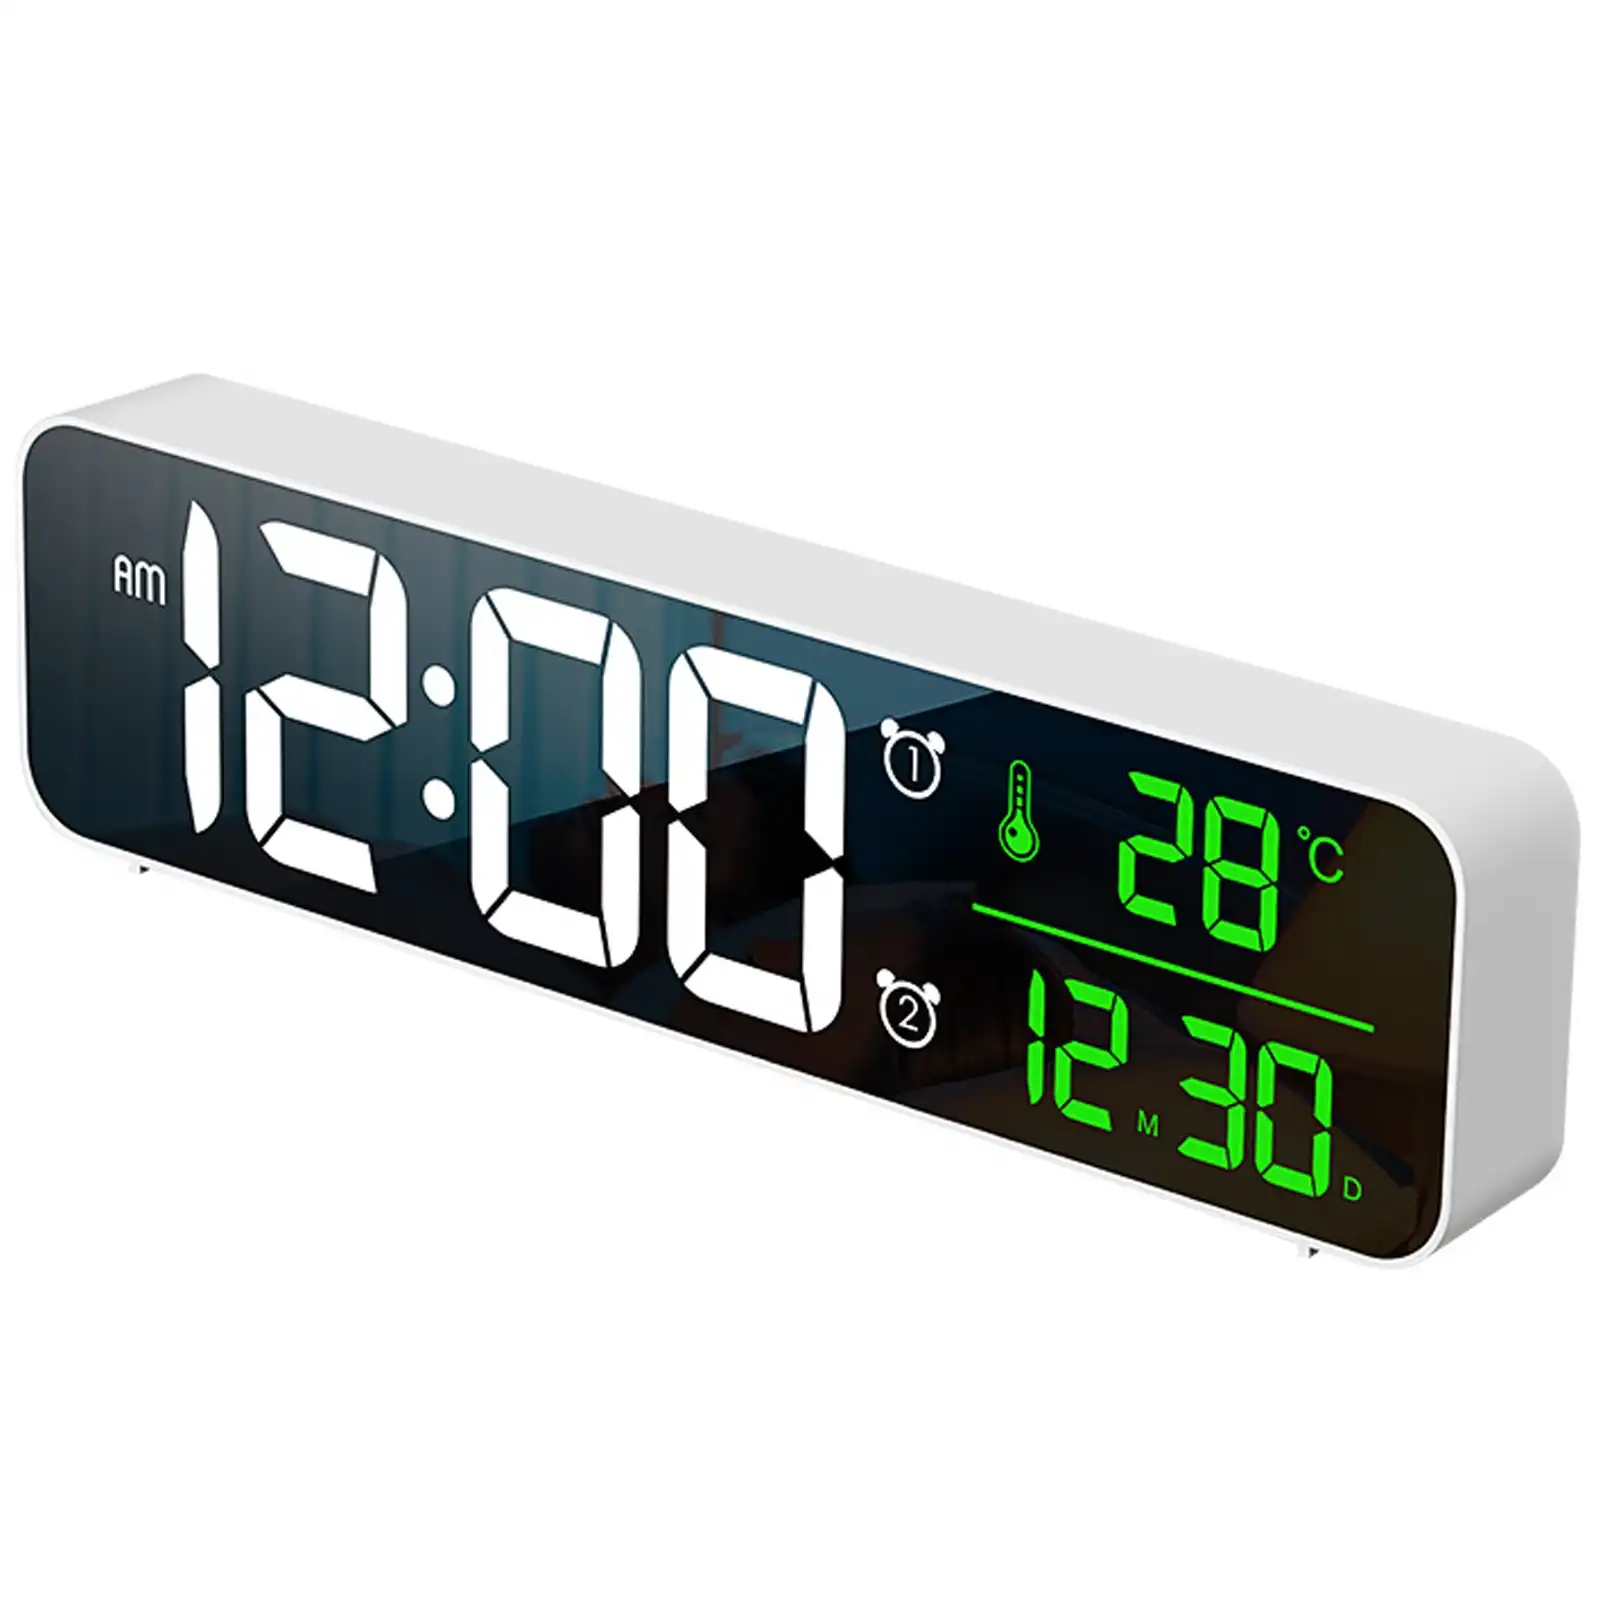 TODO LED Digital Alarm Clock Temperature Music Alarm USB Power Wall Clock - White